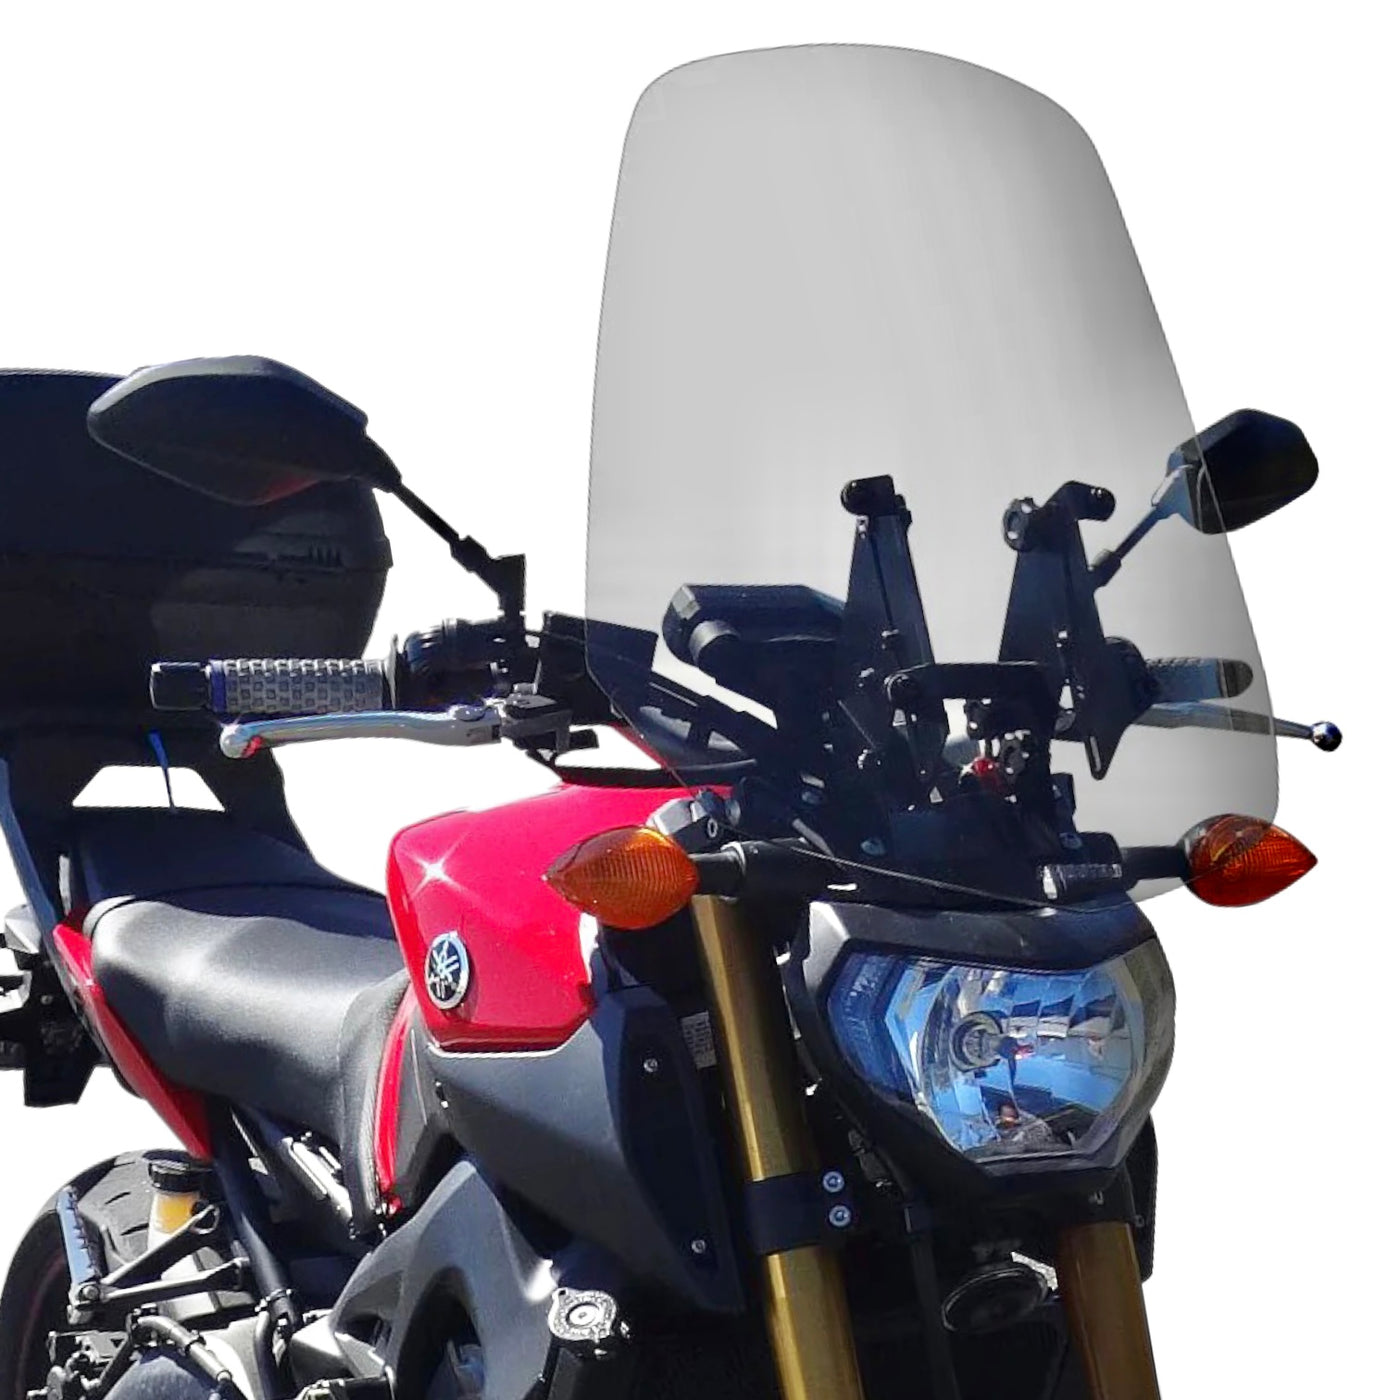 Adjustable Windshield System for Yamaha FZ-09/MT-09 (2013 - 2016)